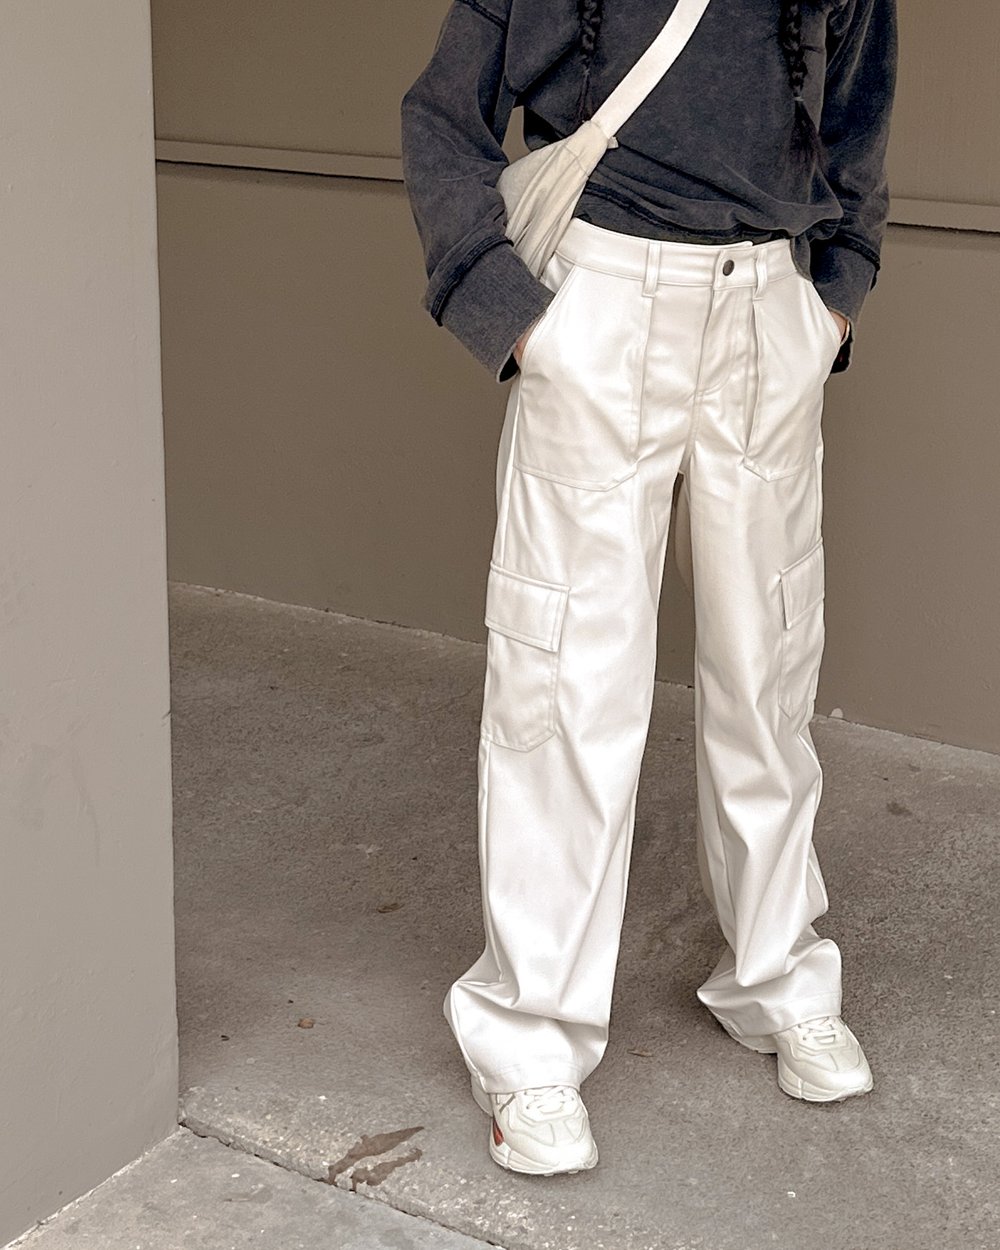 Casual Outfit Sweatshirt and Target Cargo Pants - Amanda N Hammond-03.jpg